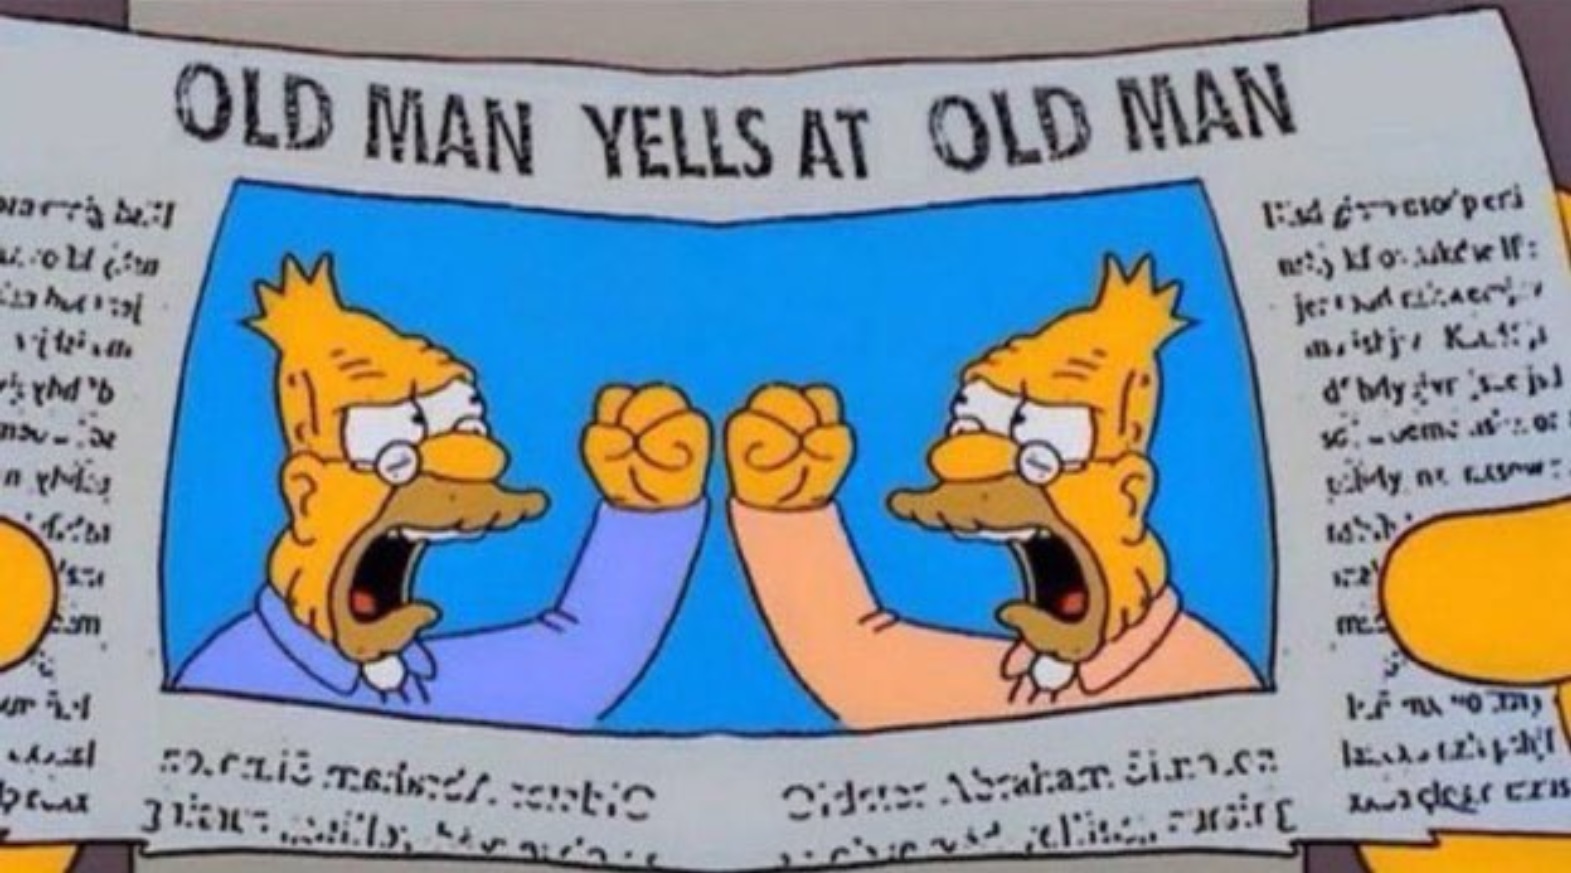 PHOTO Old Man Yells At Old Man Trump Biden Debate Meme